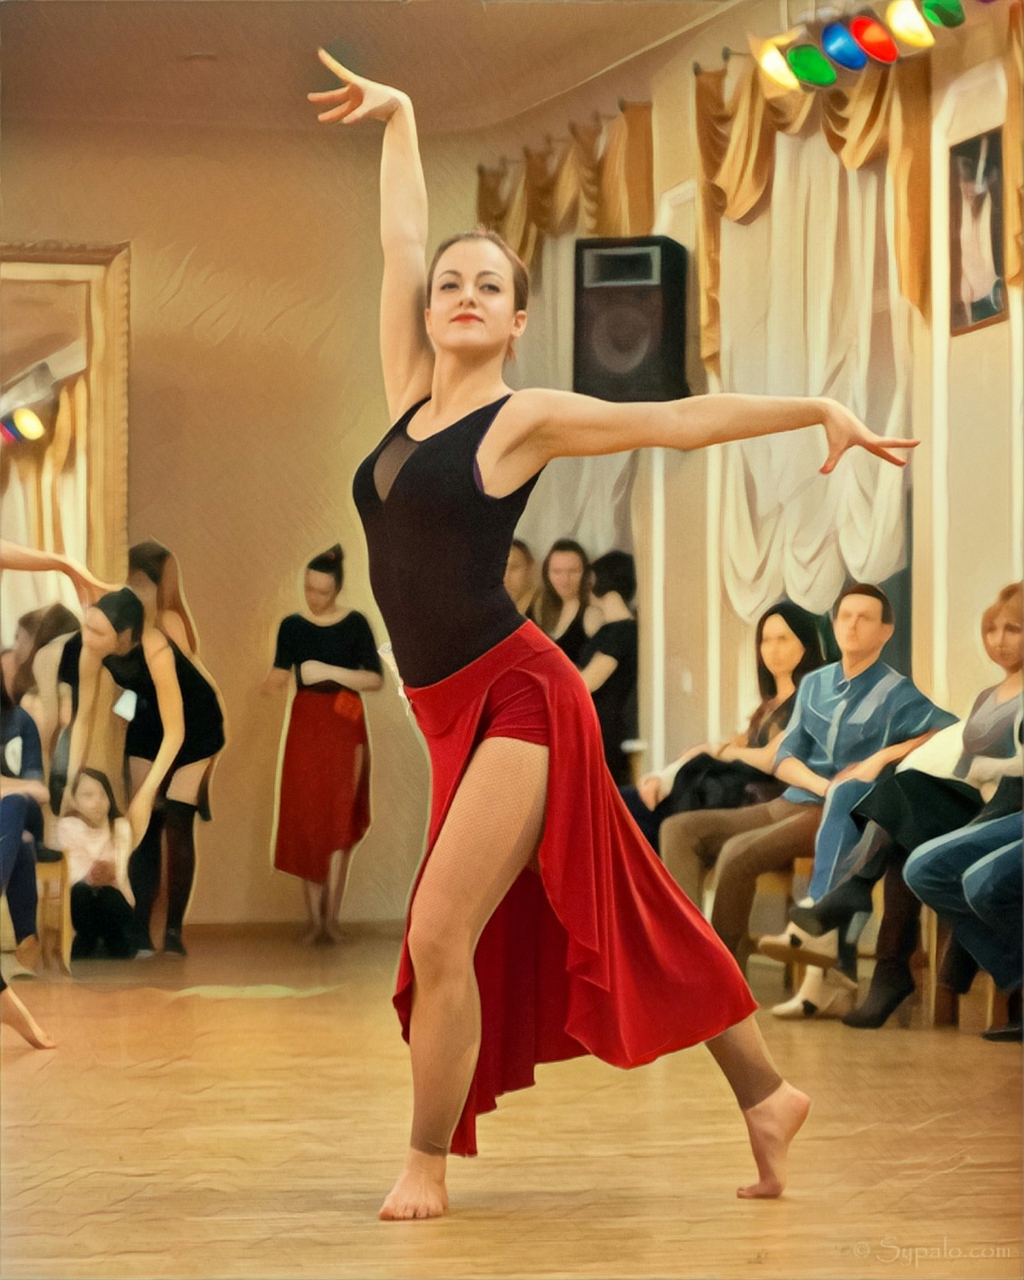 A woman in a red dress dancing tango